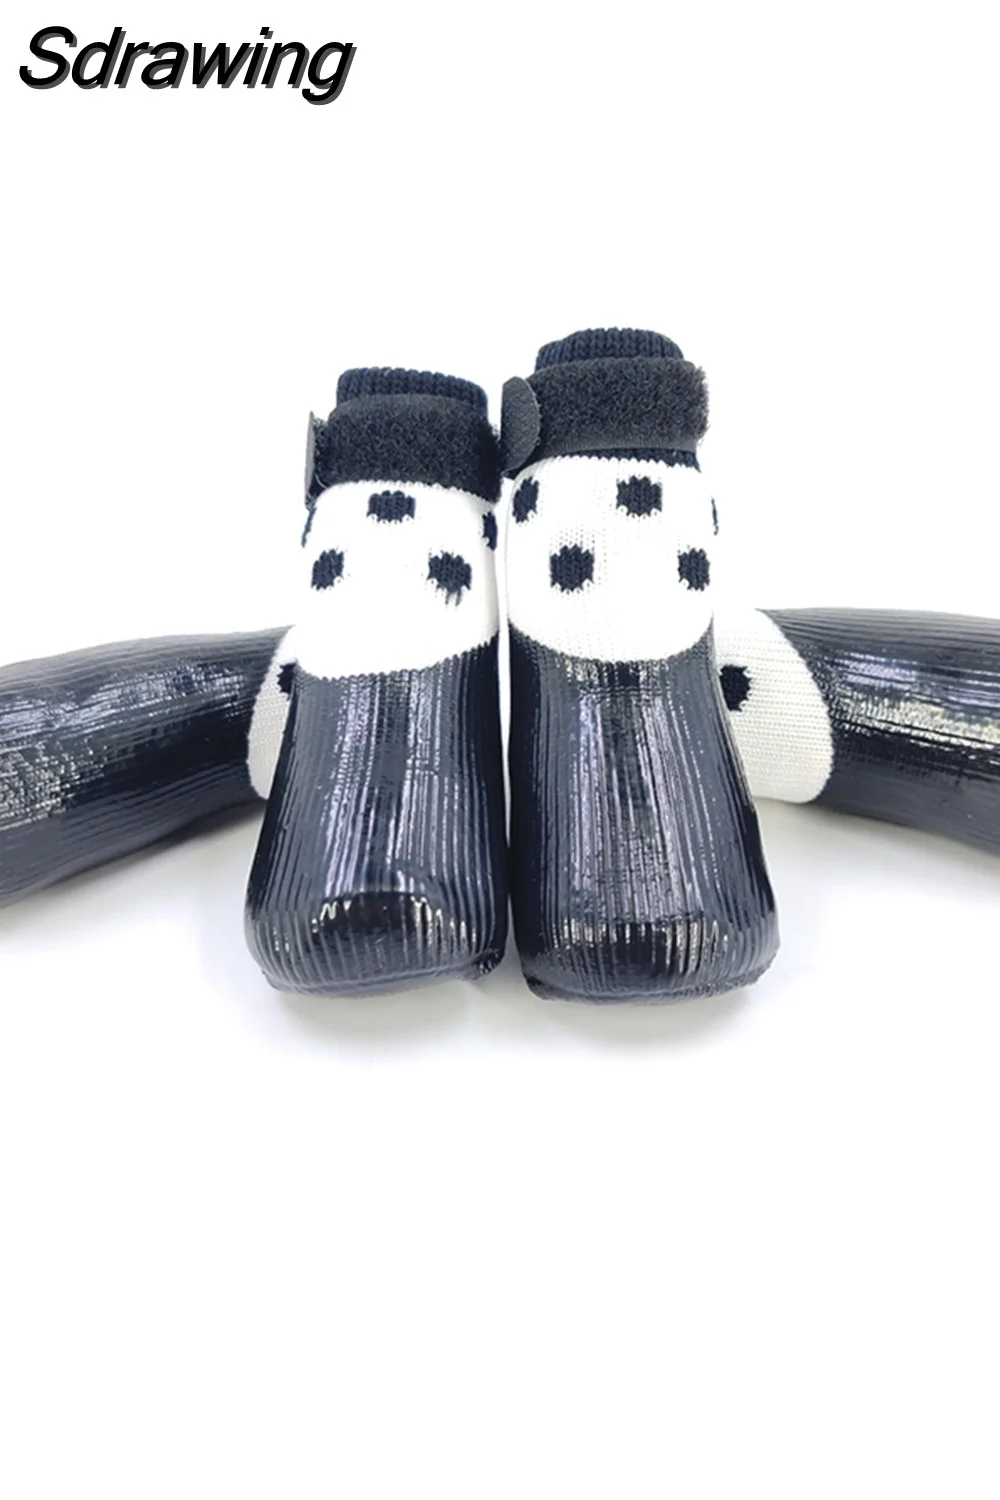 Sdrawing Cartoon Dog Shoes Socks Waterproof Non-slip Dog Rain Snow Boots Socks Puppy Small Cats Dogs Rubber Socks Foot protector